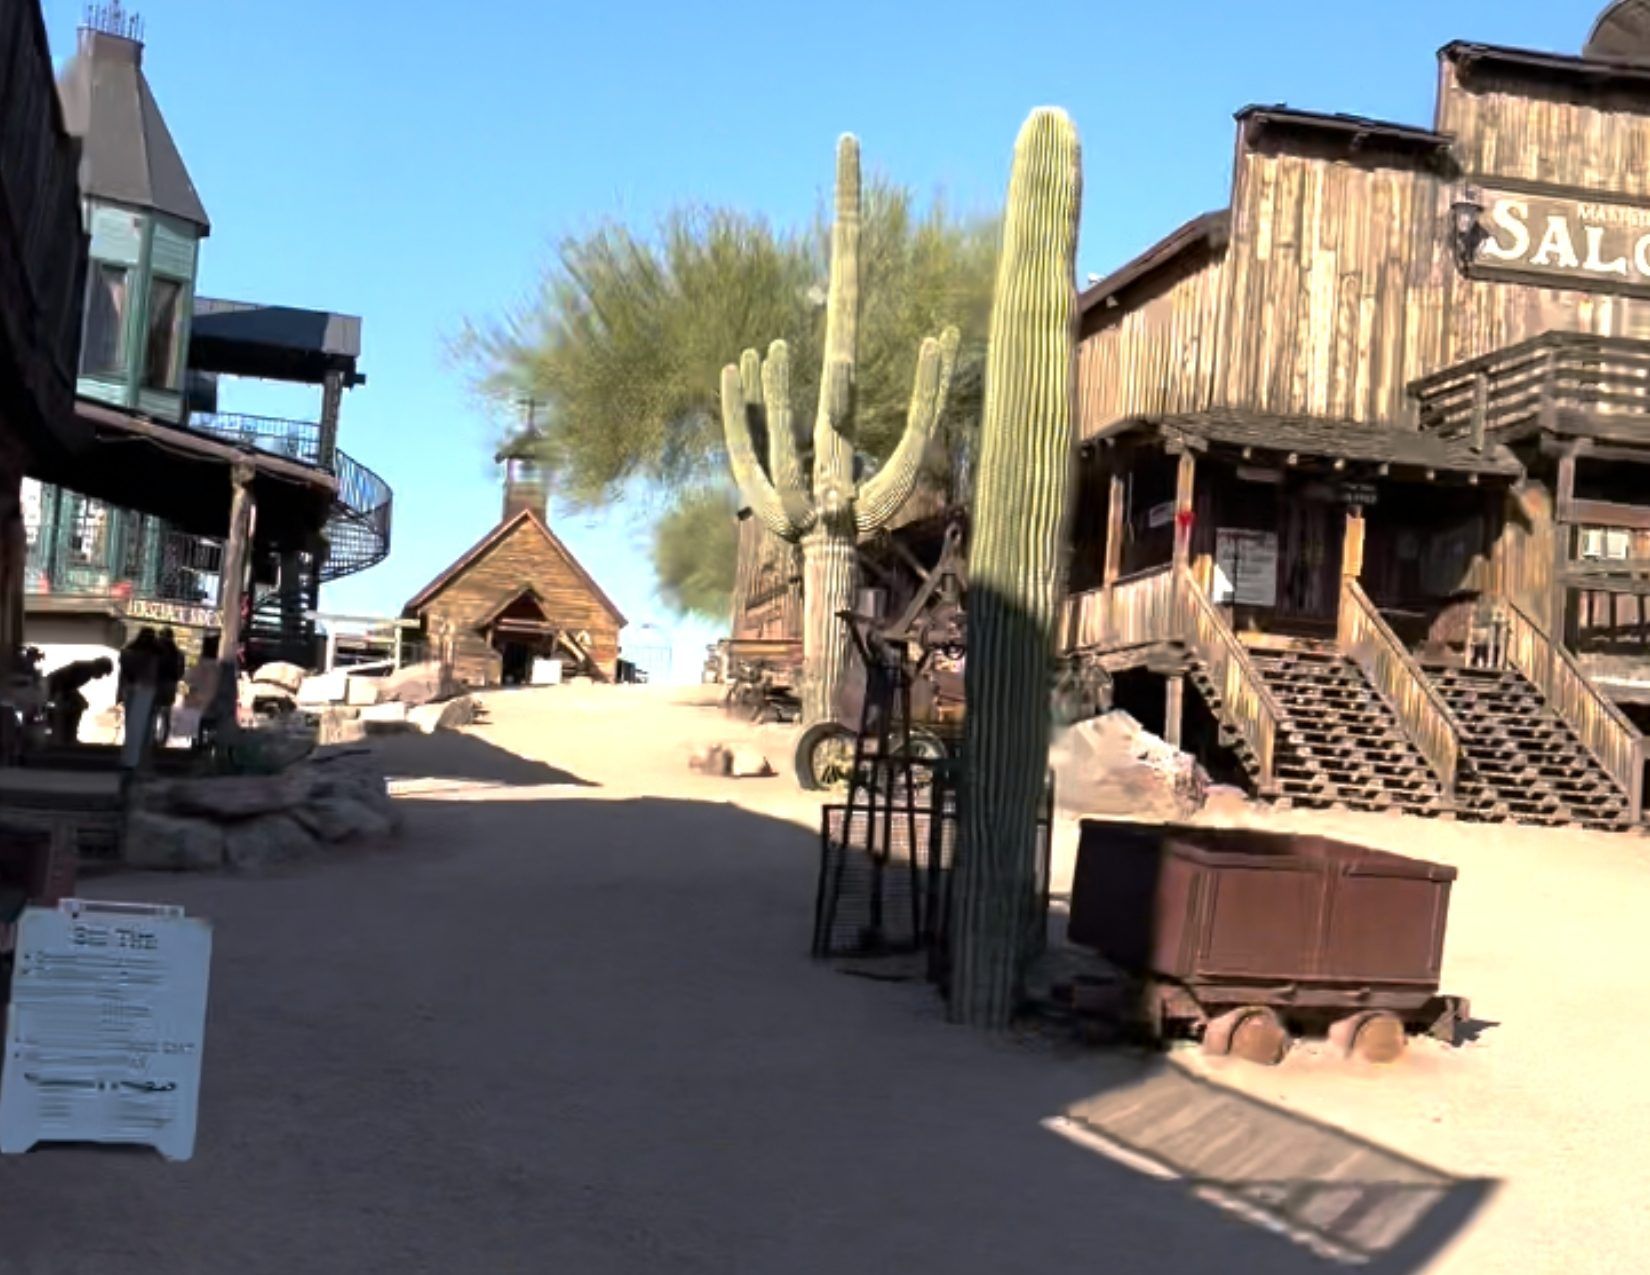 ghost town in central Arizona, desert, saguaro cacti, old saloon at Goldfield Ghost Town Mesa Arizona